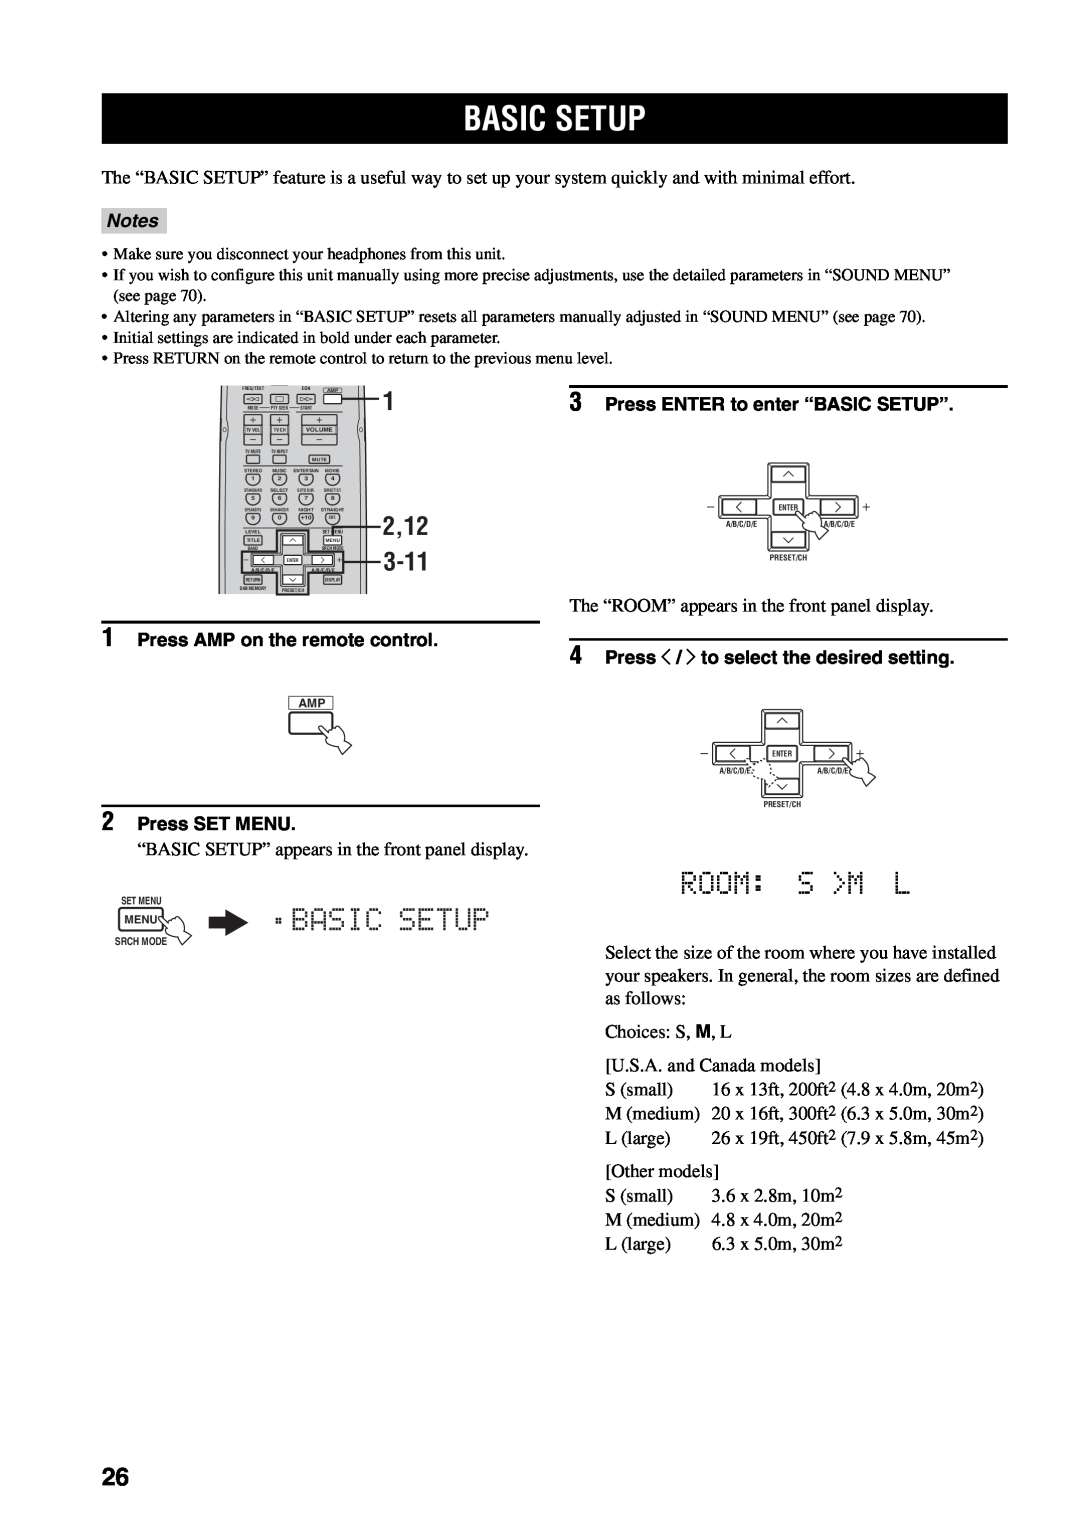 Yamaha RX-V459 owner manual Room: S >M L, Menu.Basic Setup, 2,12, 3-11, Notes 